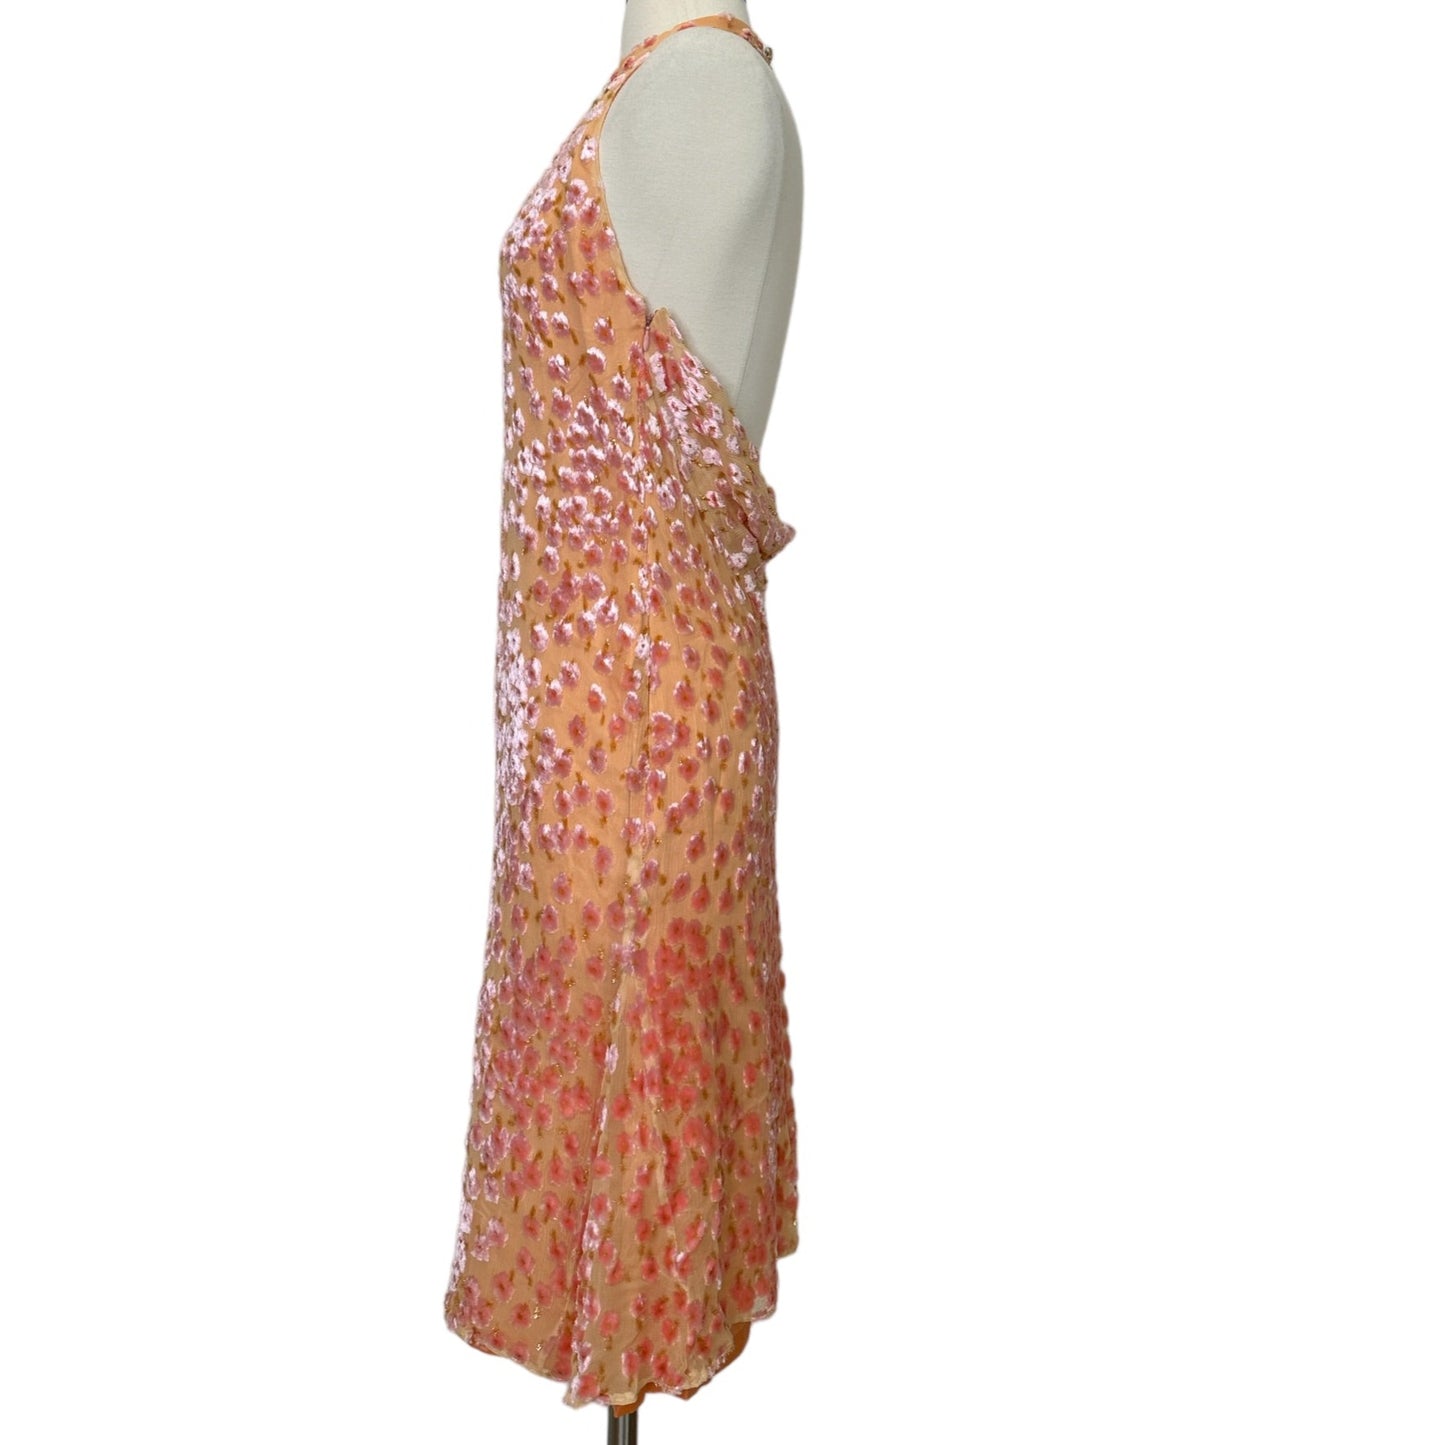 Orange & Pink Print Dress - S